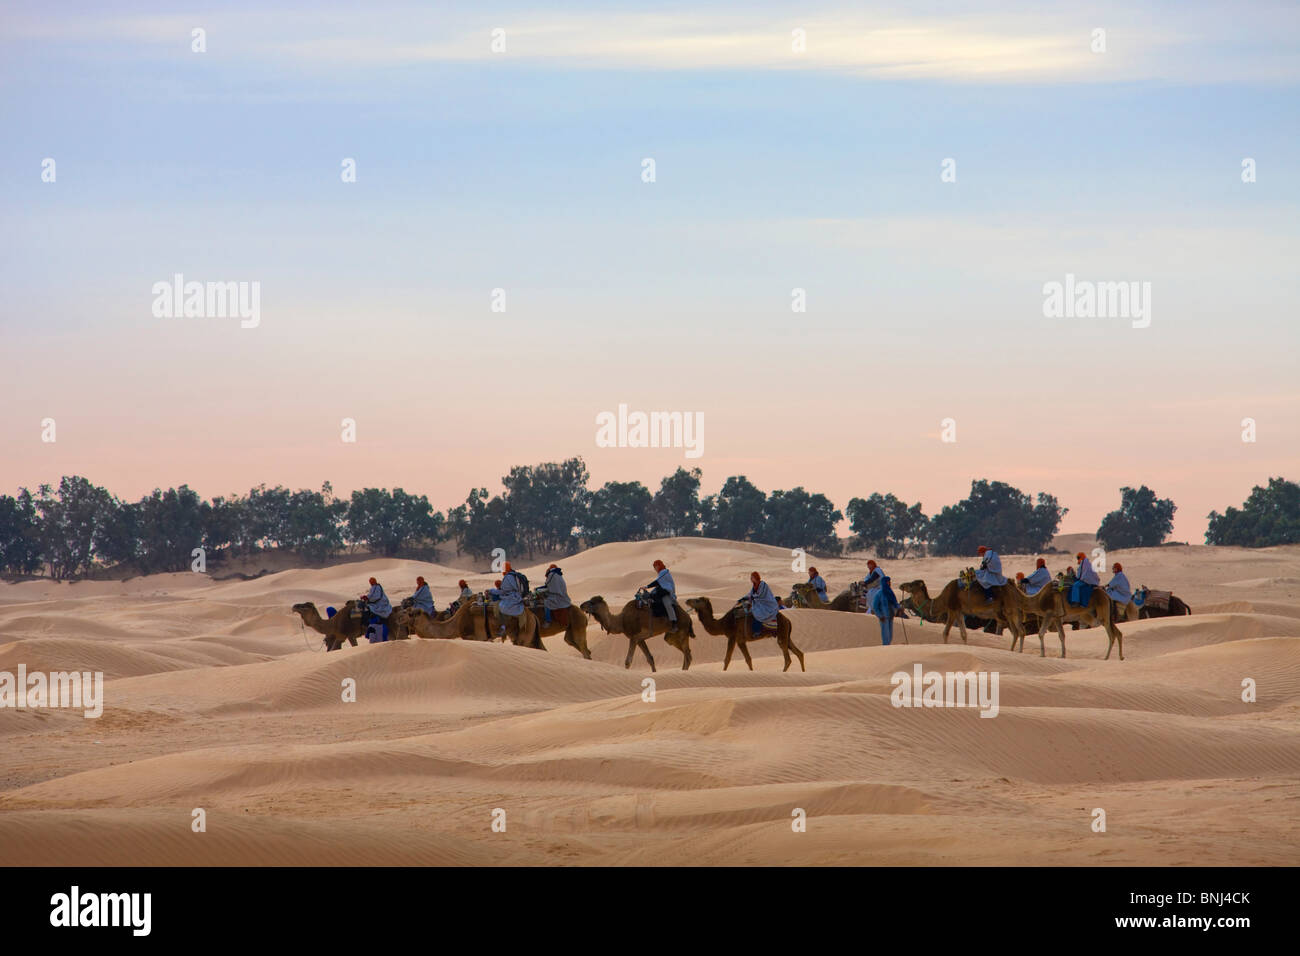 Tunisia Africa North Africa Arabian Arabic Arab Douz town city Sahara festival tourist camel horse riding camels desert caravan Stock Photo